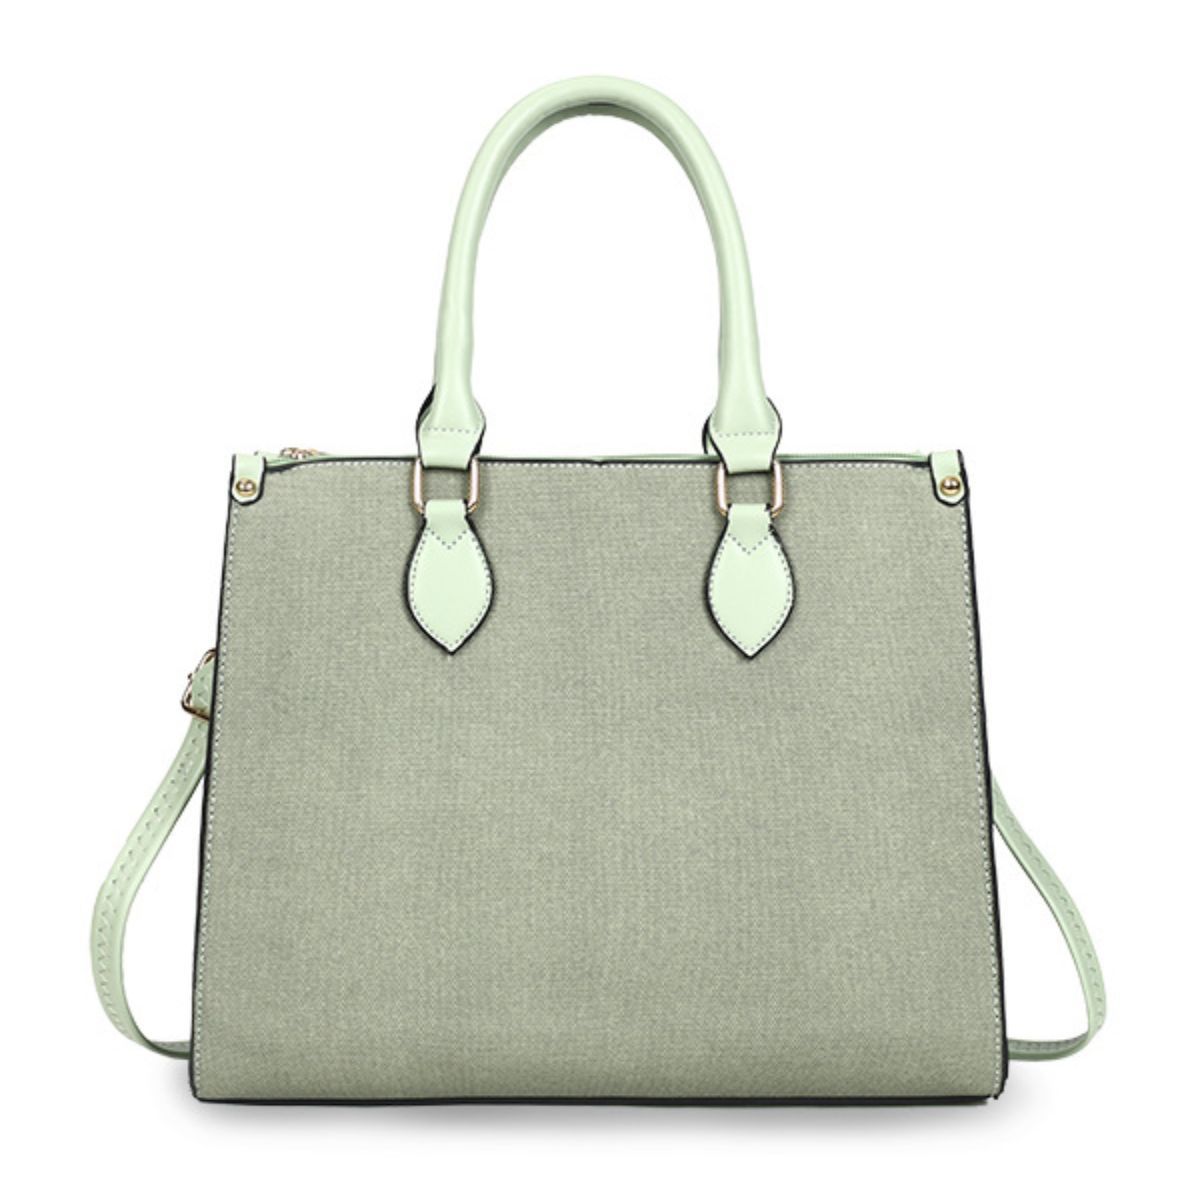 Purse Green Pebble Grain Satchel Handbag for Women